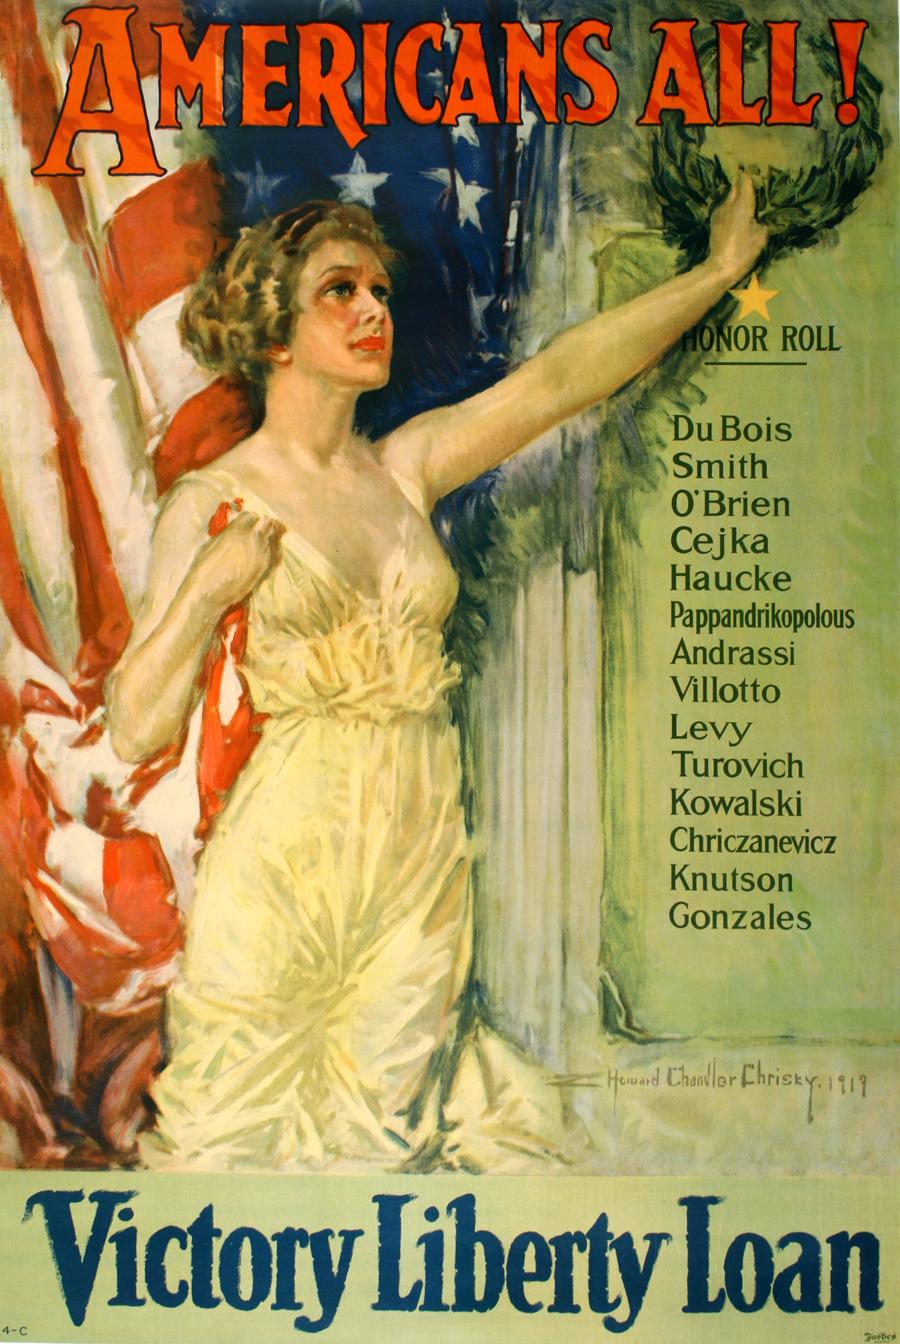 Tous les Américains ! Victory Liberty Loan Original Vintage WWI Poster by Christy 1919 - Print de Howard Chandler Christy